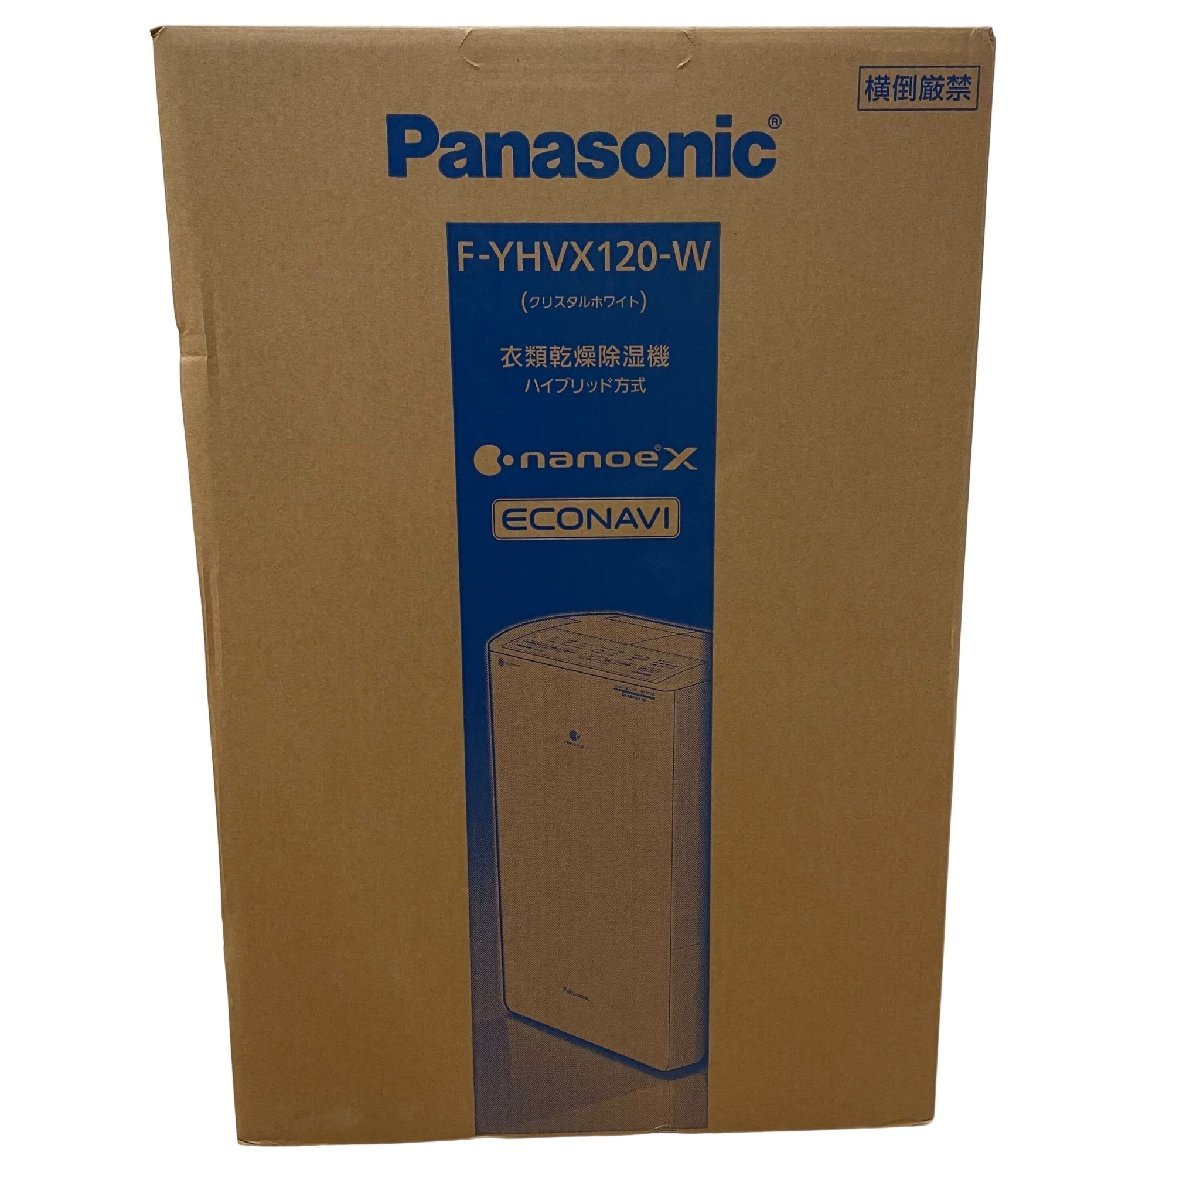 Panasonic パナソニック 衣類乾燥除湿機 F-YHVX120-W クリスタル